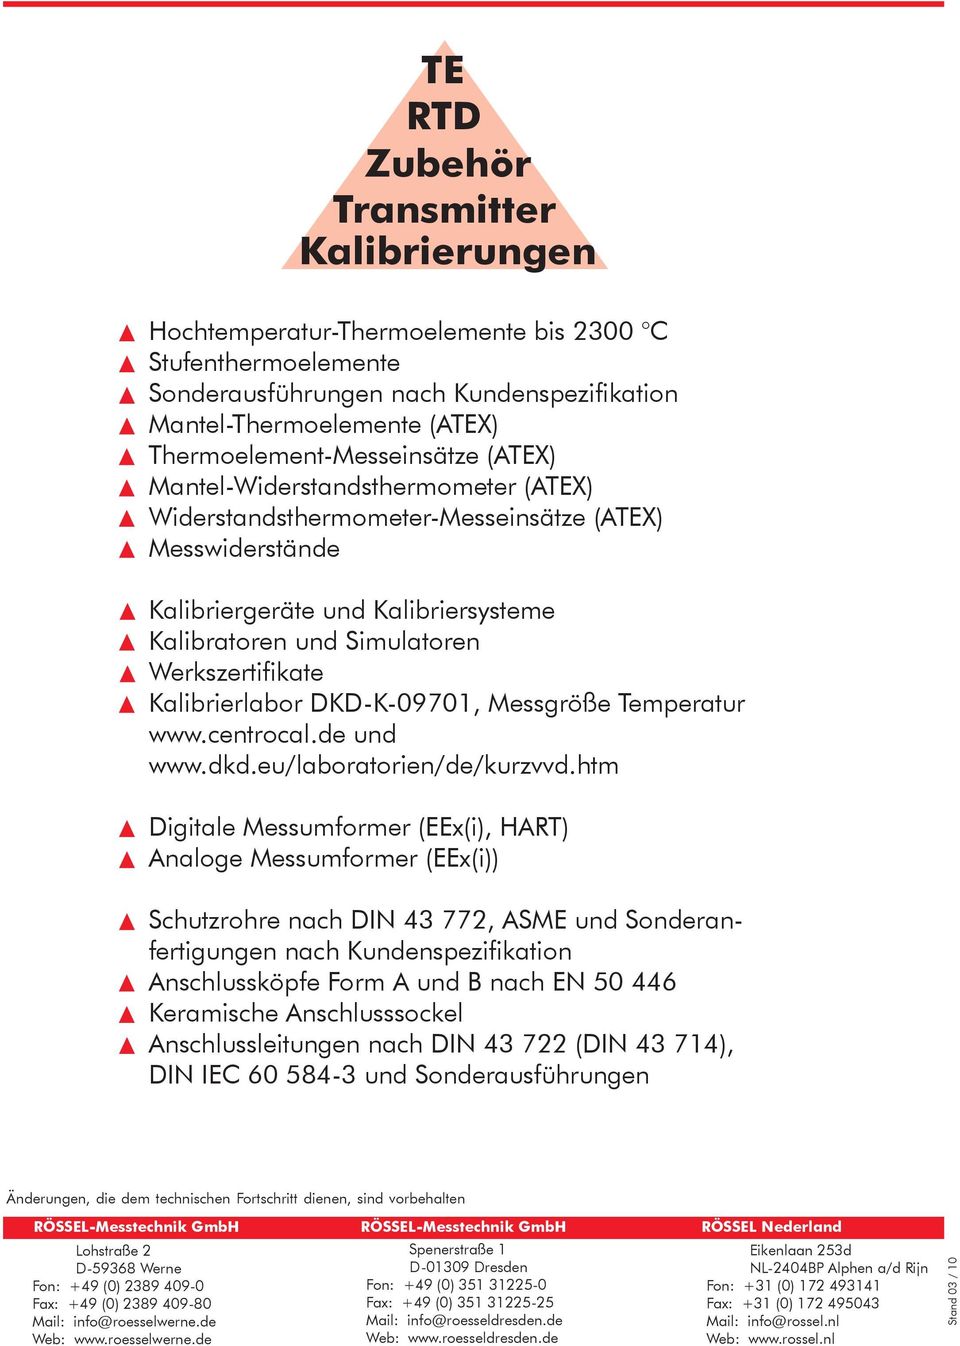 Werkszertifikate Kalibrierlabor DKD-K-09701, Messgröße Temperatur www.centrocal.de und www.dkd.eu/laboratorien/de/kurzvvd.